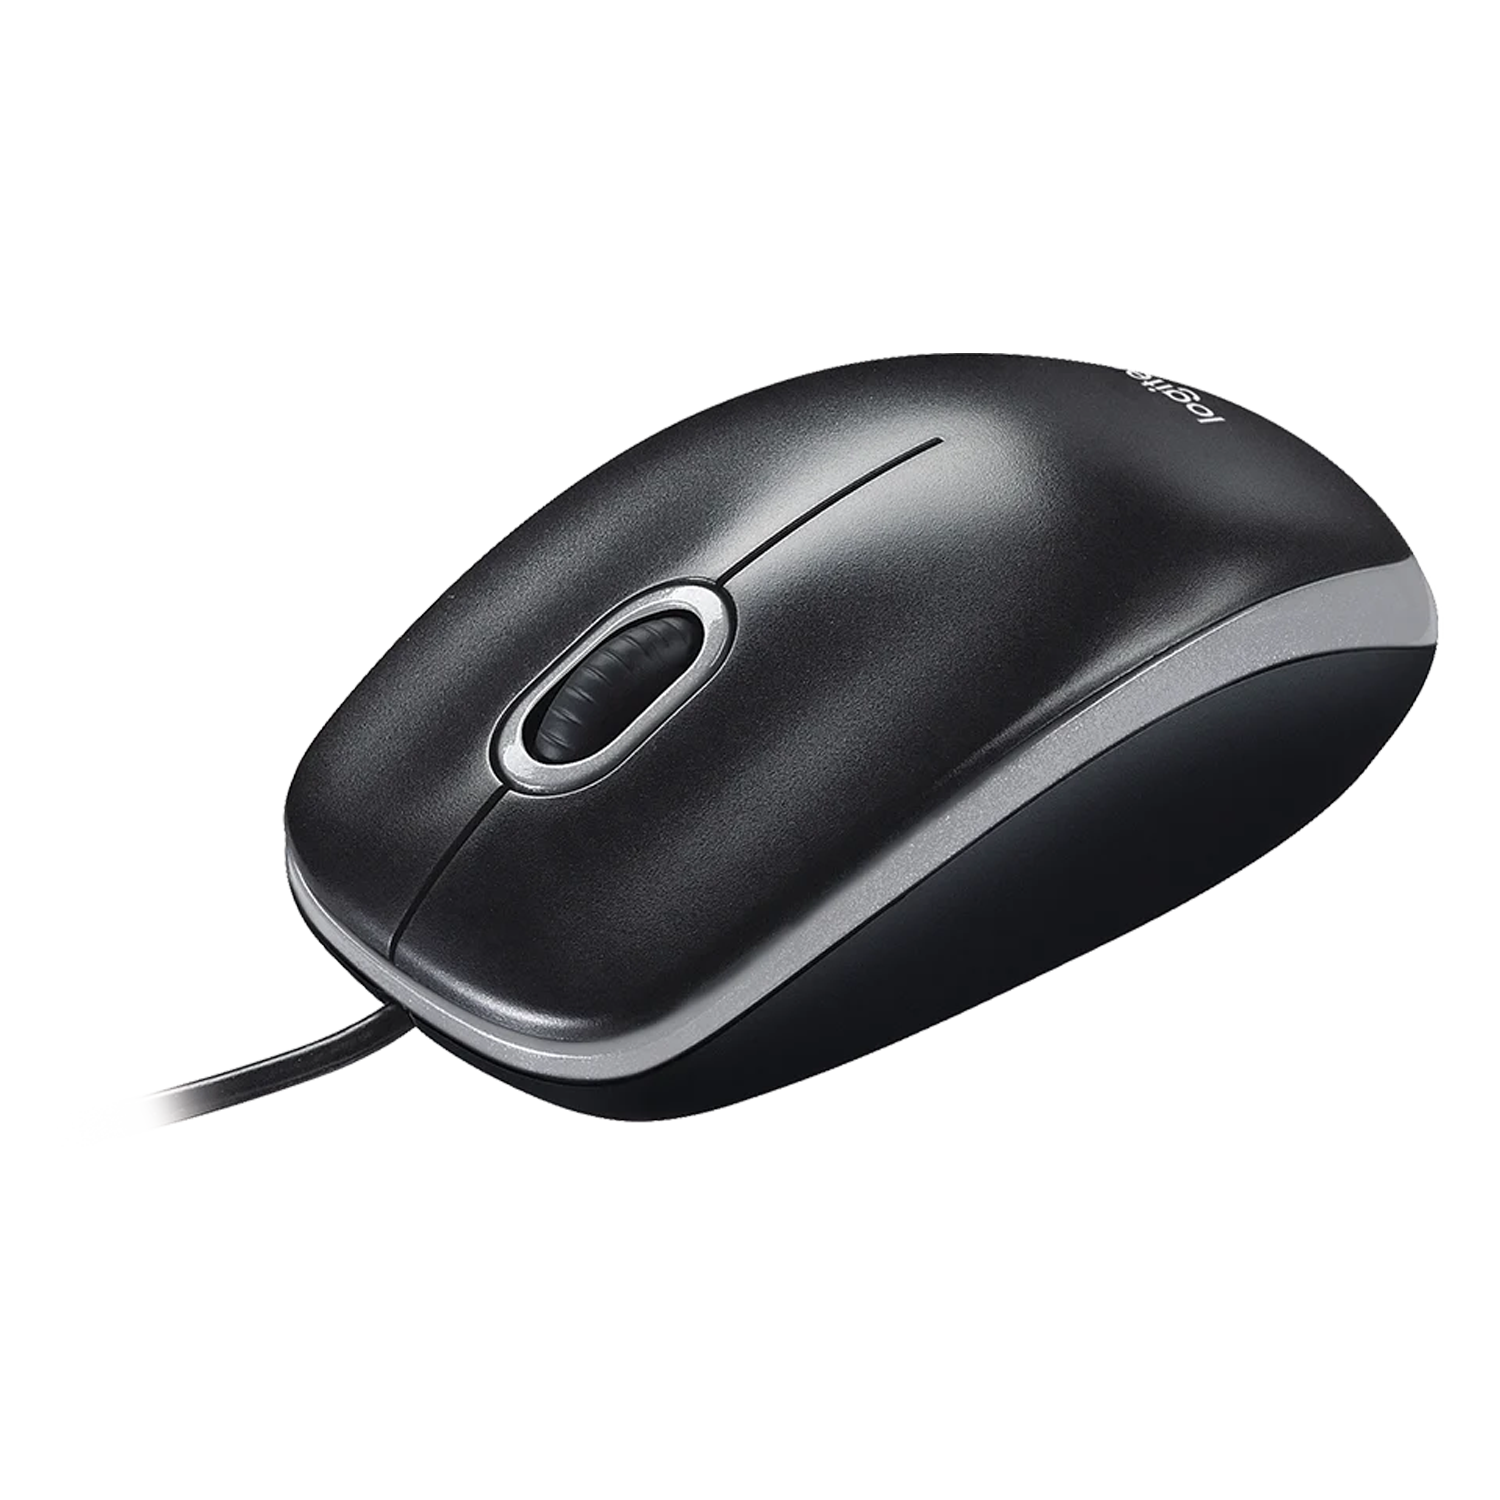 Mouse e Teclado Logitech MK-200 / Espanhol - Preto (920-002716)